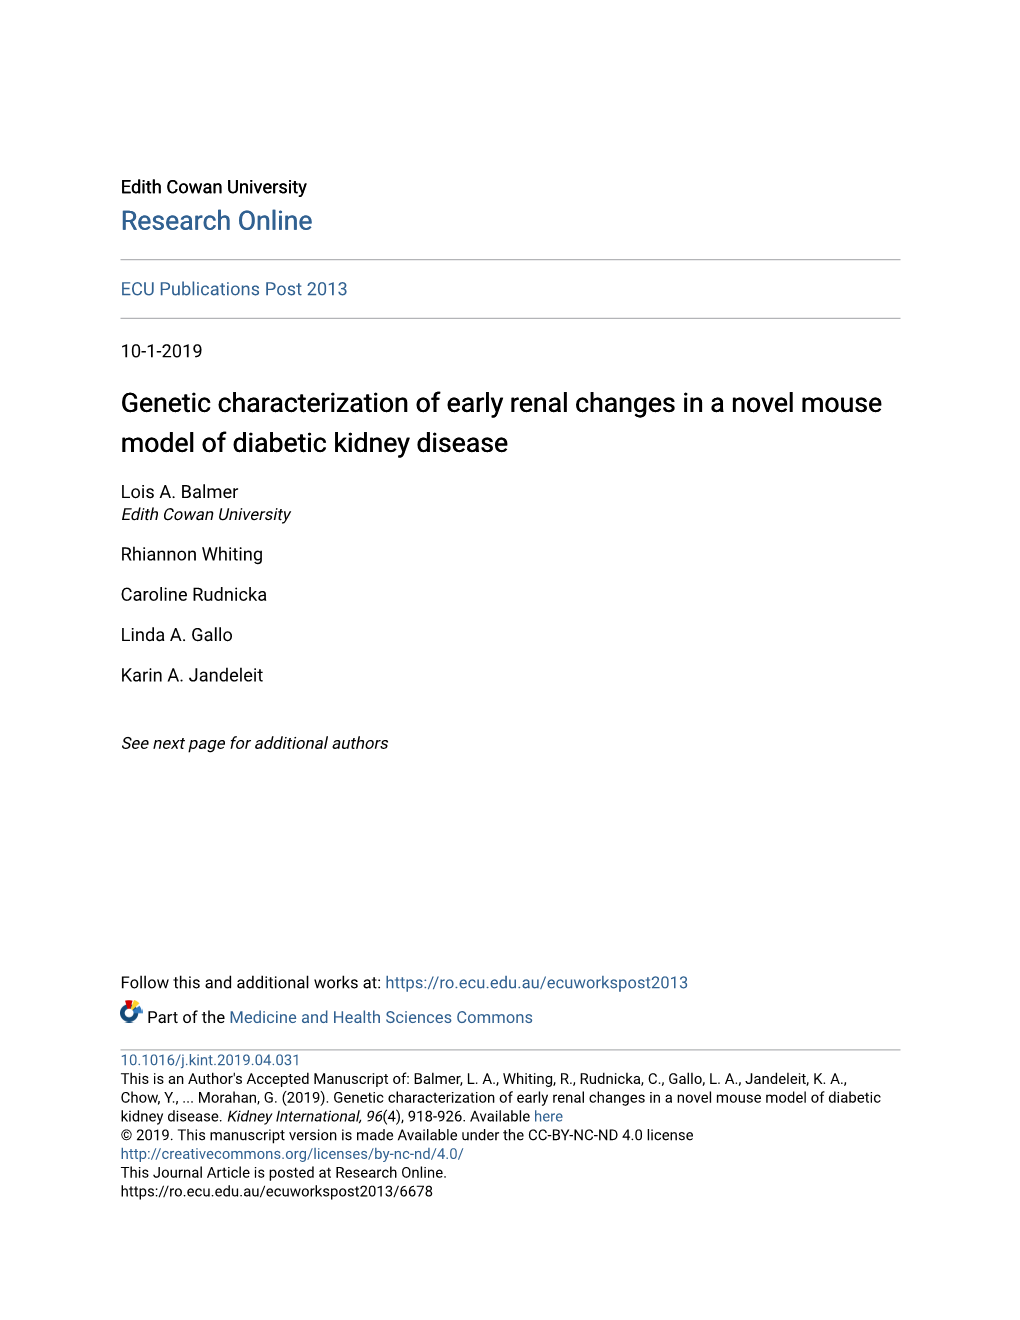 Genetic Characterization of Early Renal Changes in a Novel Mouse Model of Diabetic Kidney Disease